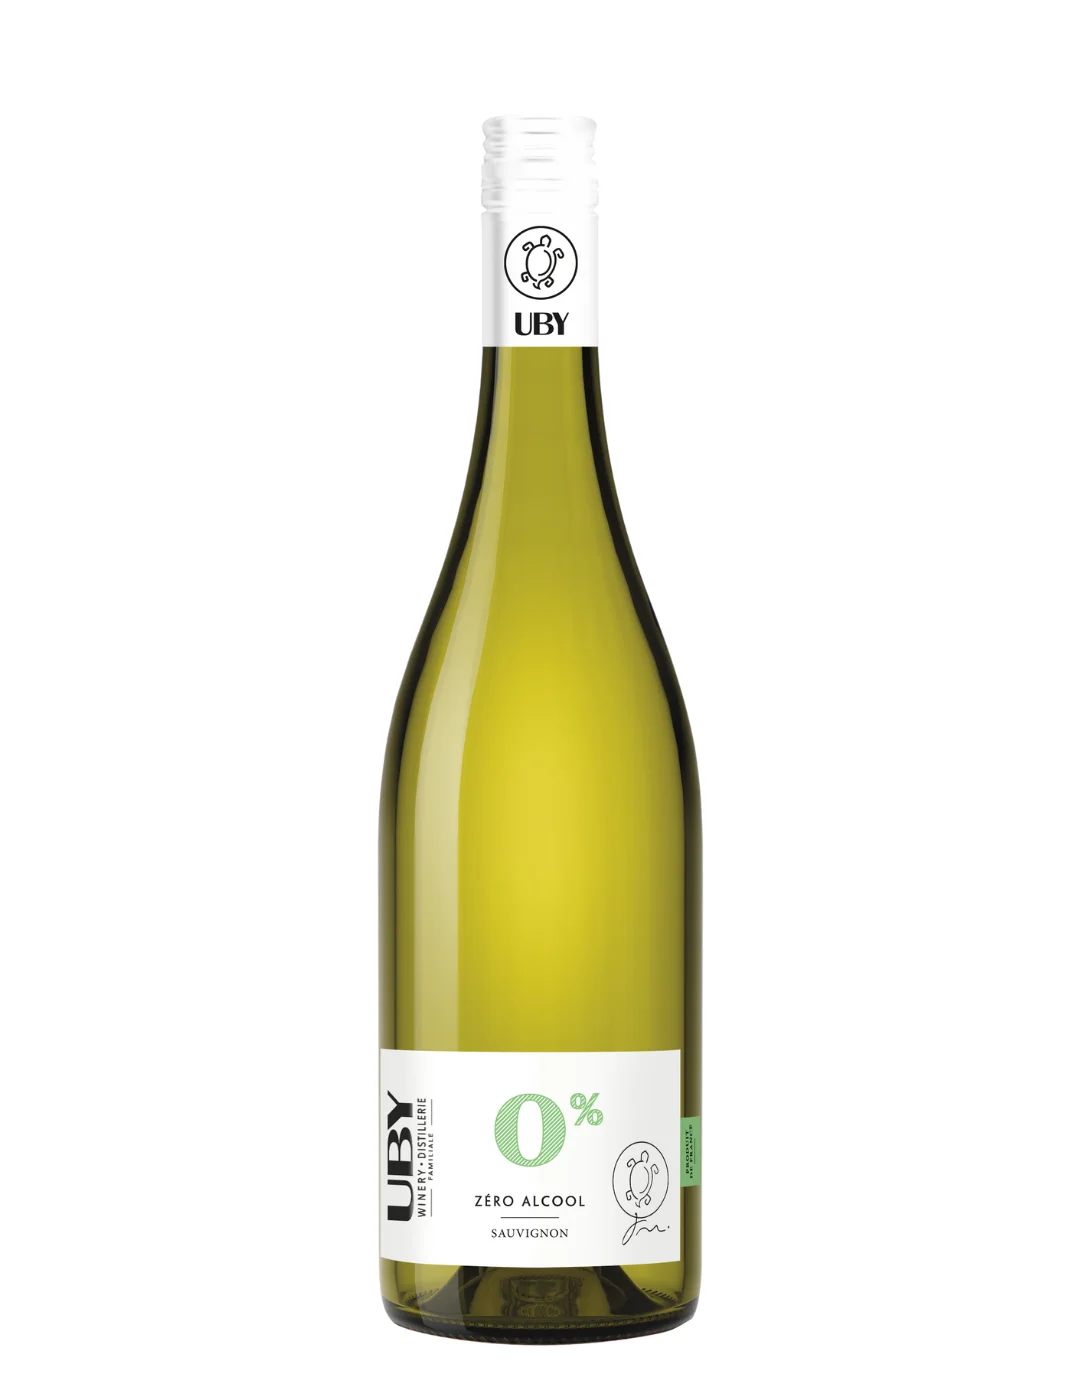 Rib0 vin blanc sec aromatique sans alcool de la Cave de Ribeauvillé